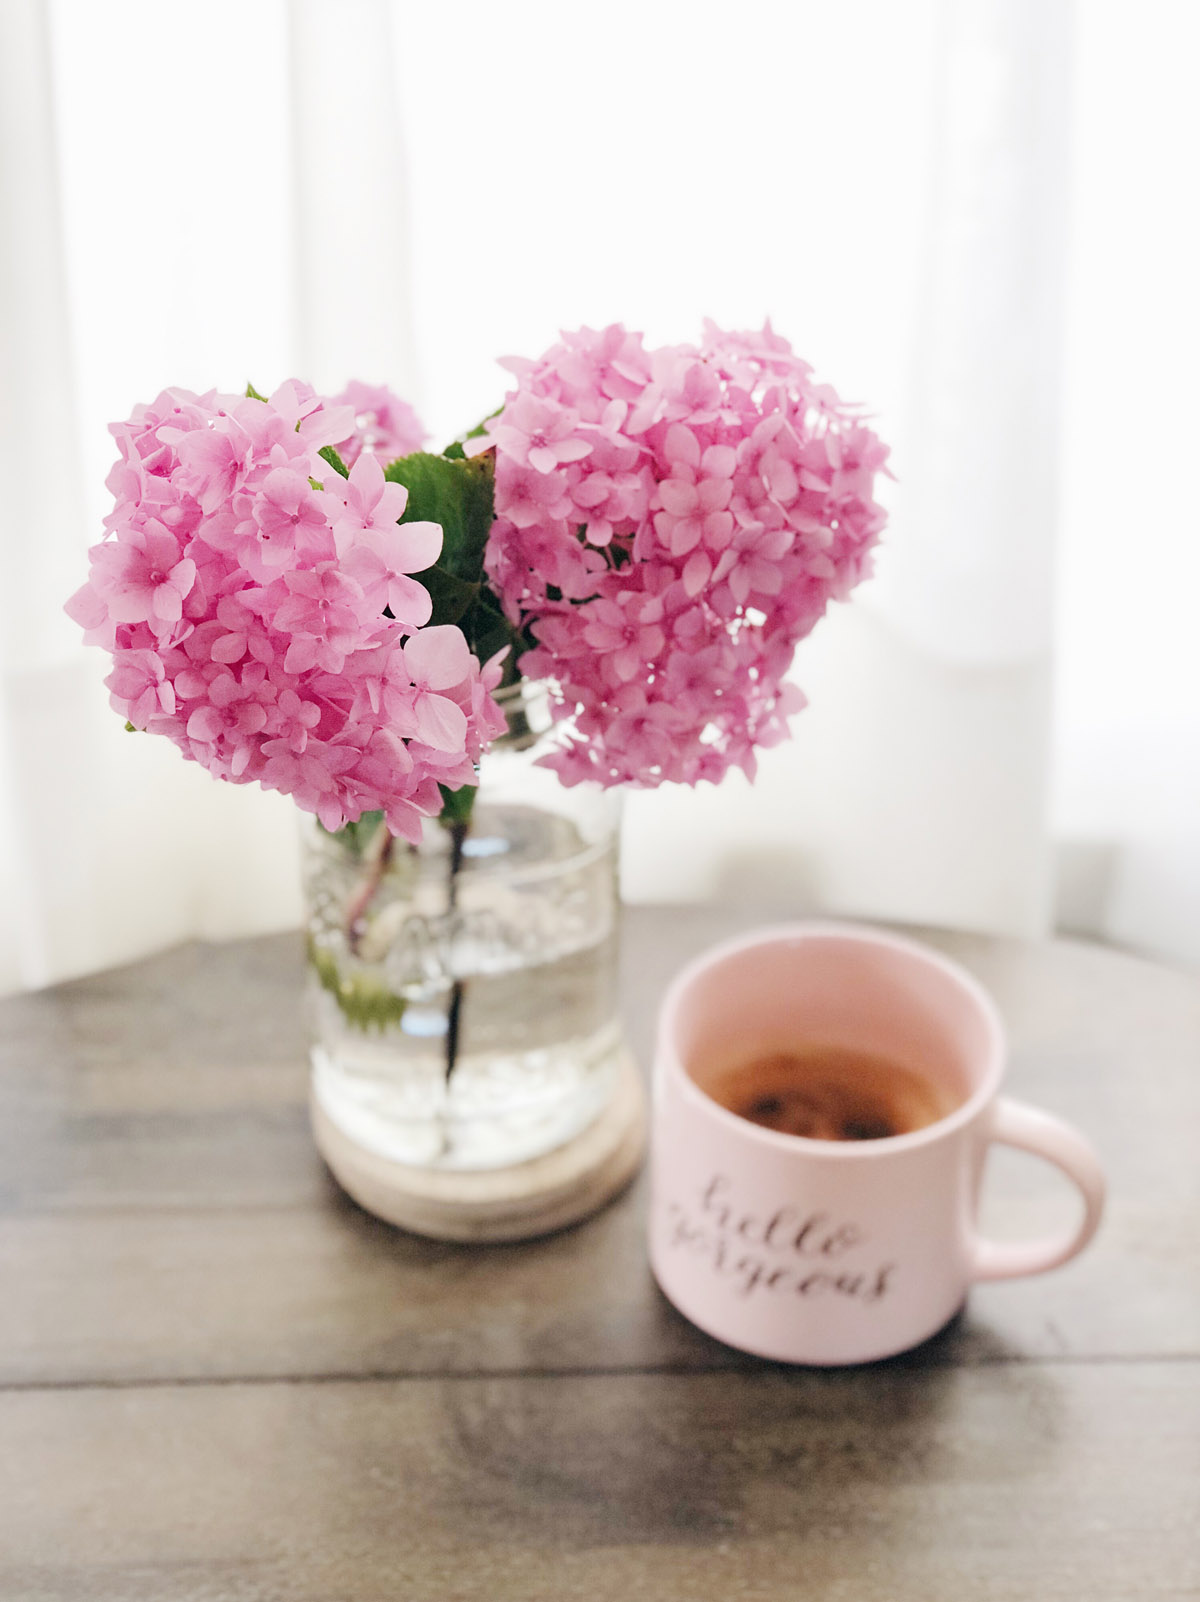 coffee, kitties, and homegrown hydrangeas